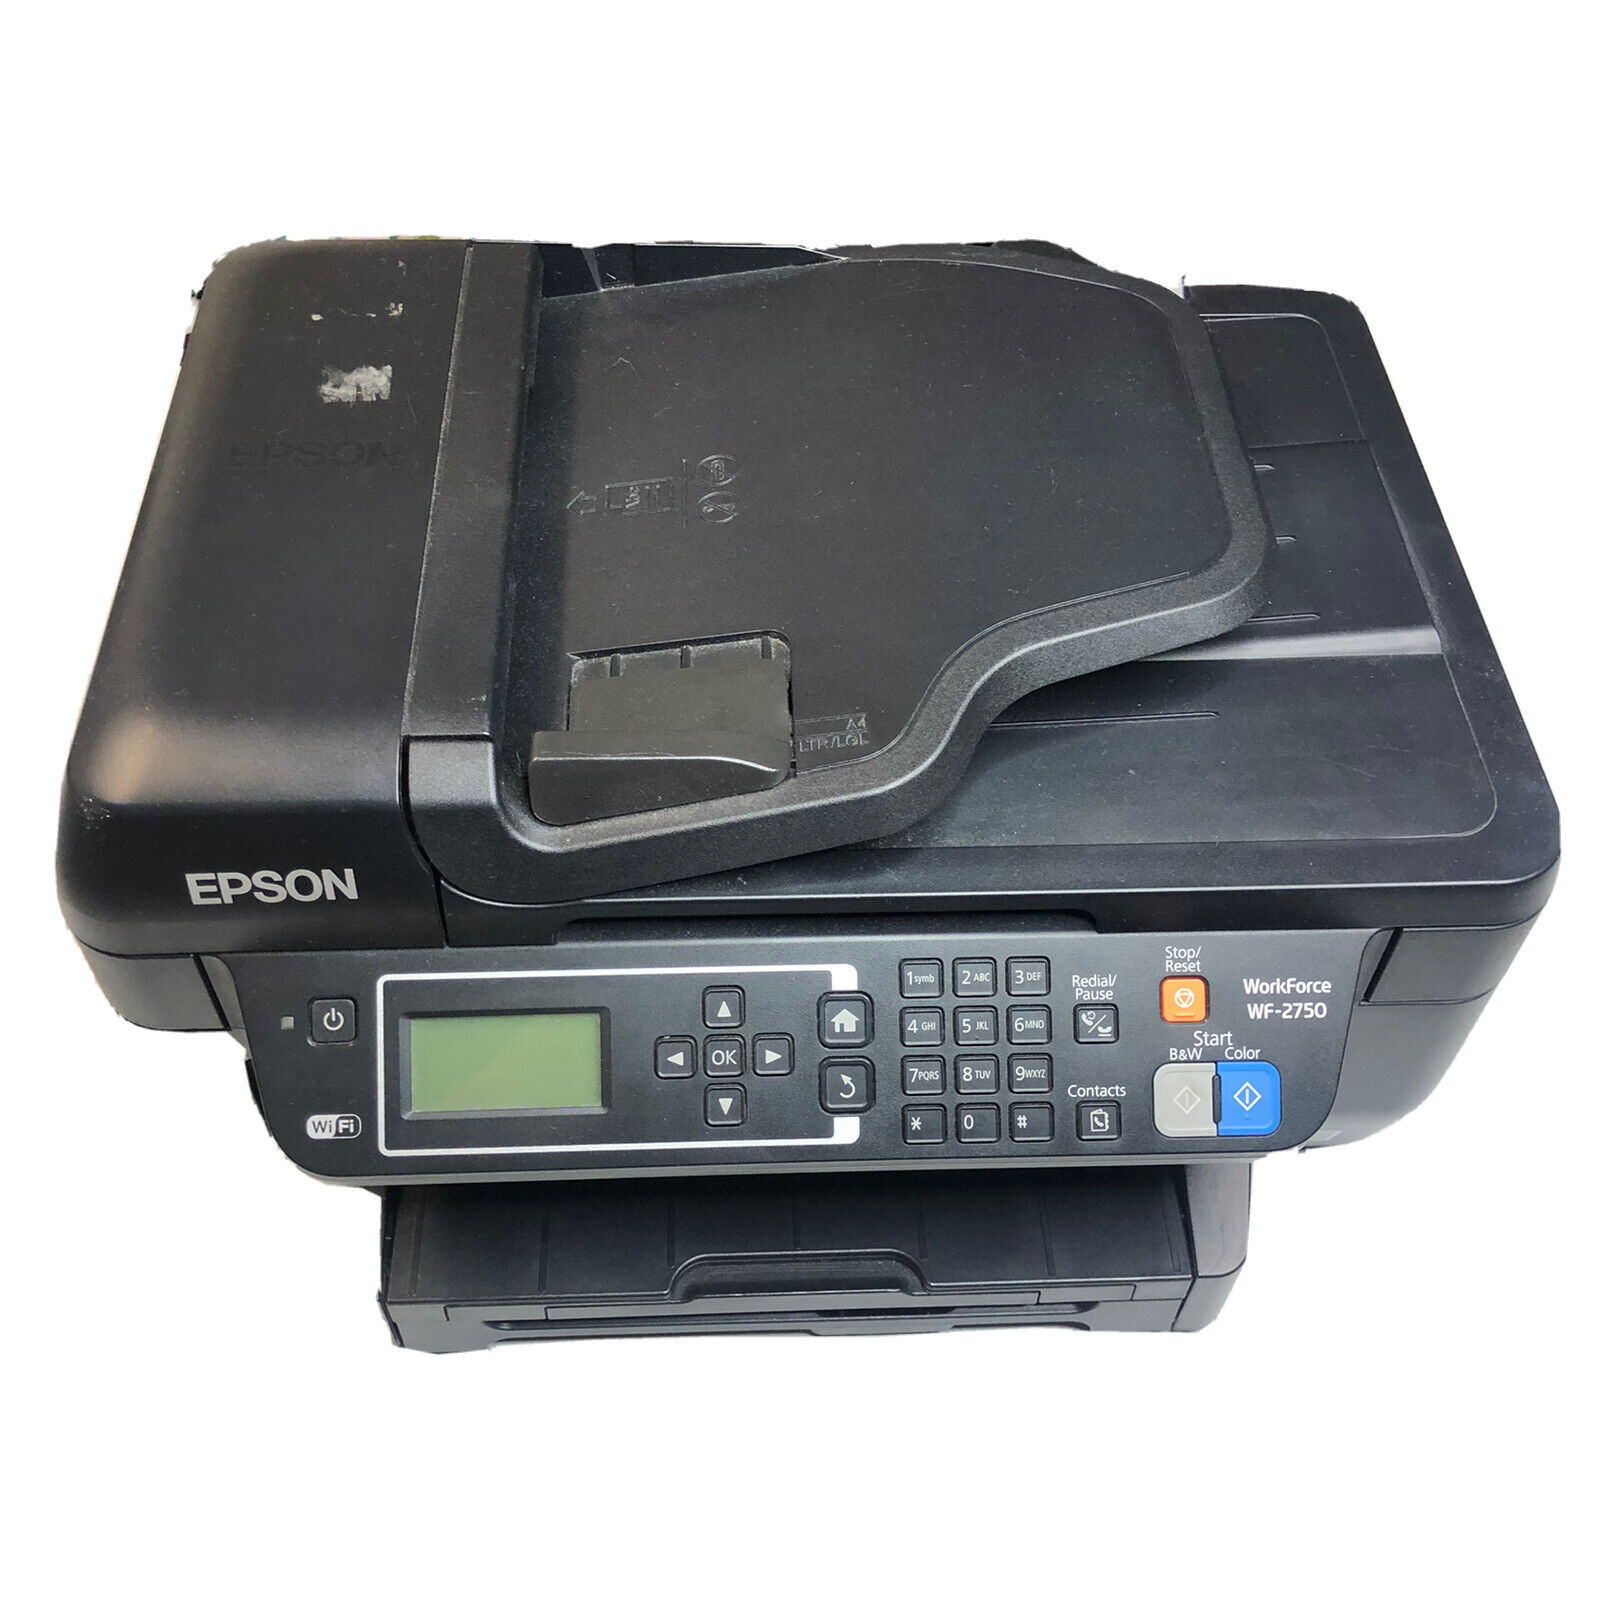 eksegese maksimere Banquet Epson Workforce WF-2750 All In One Printer Print Scan Copy Wifi Model C531A  | eBay